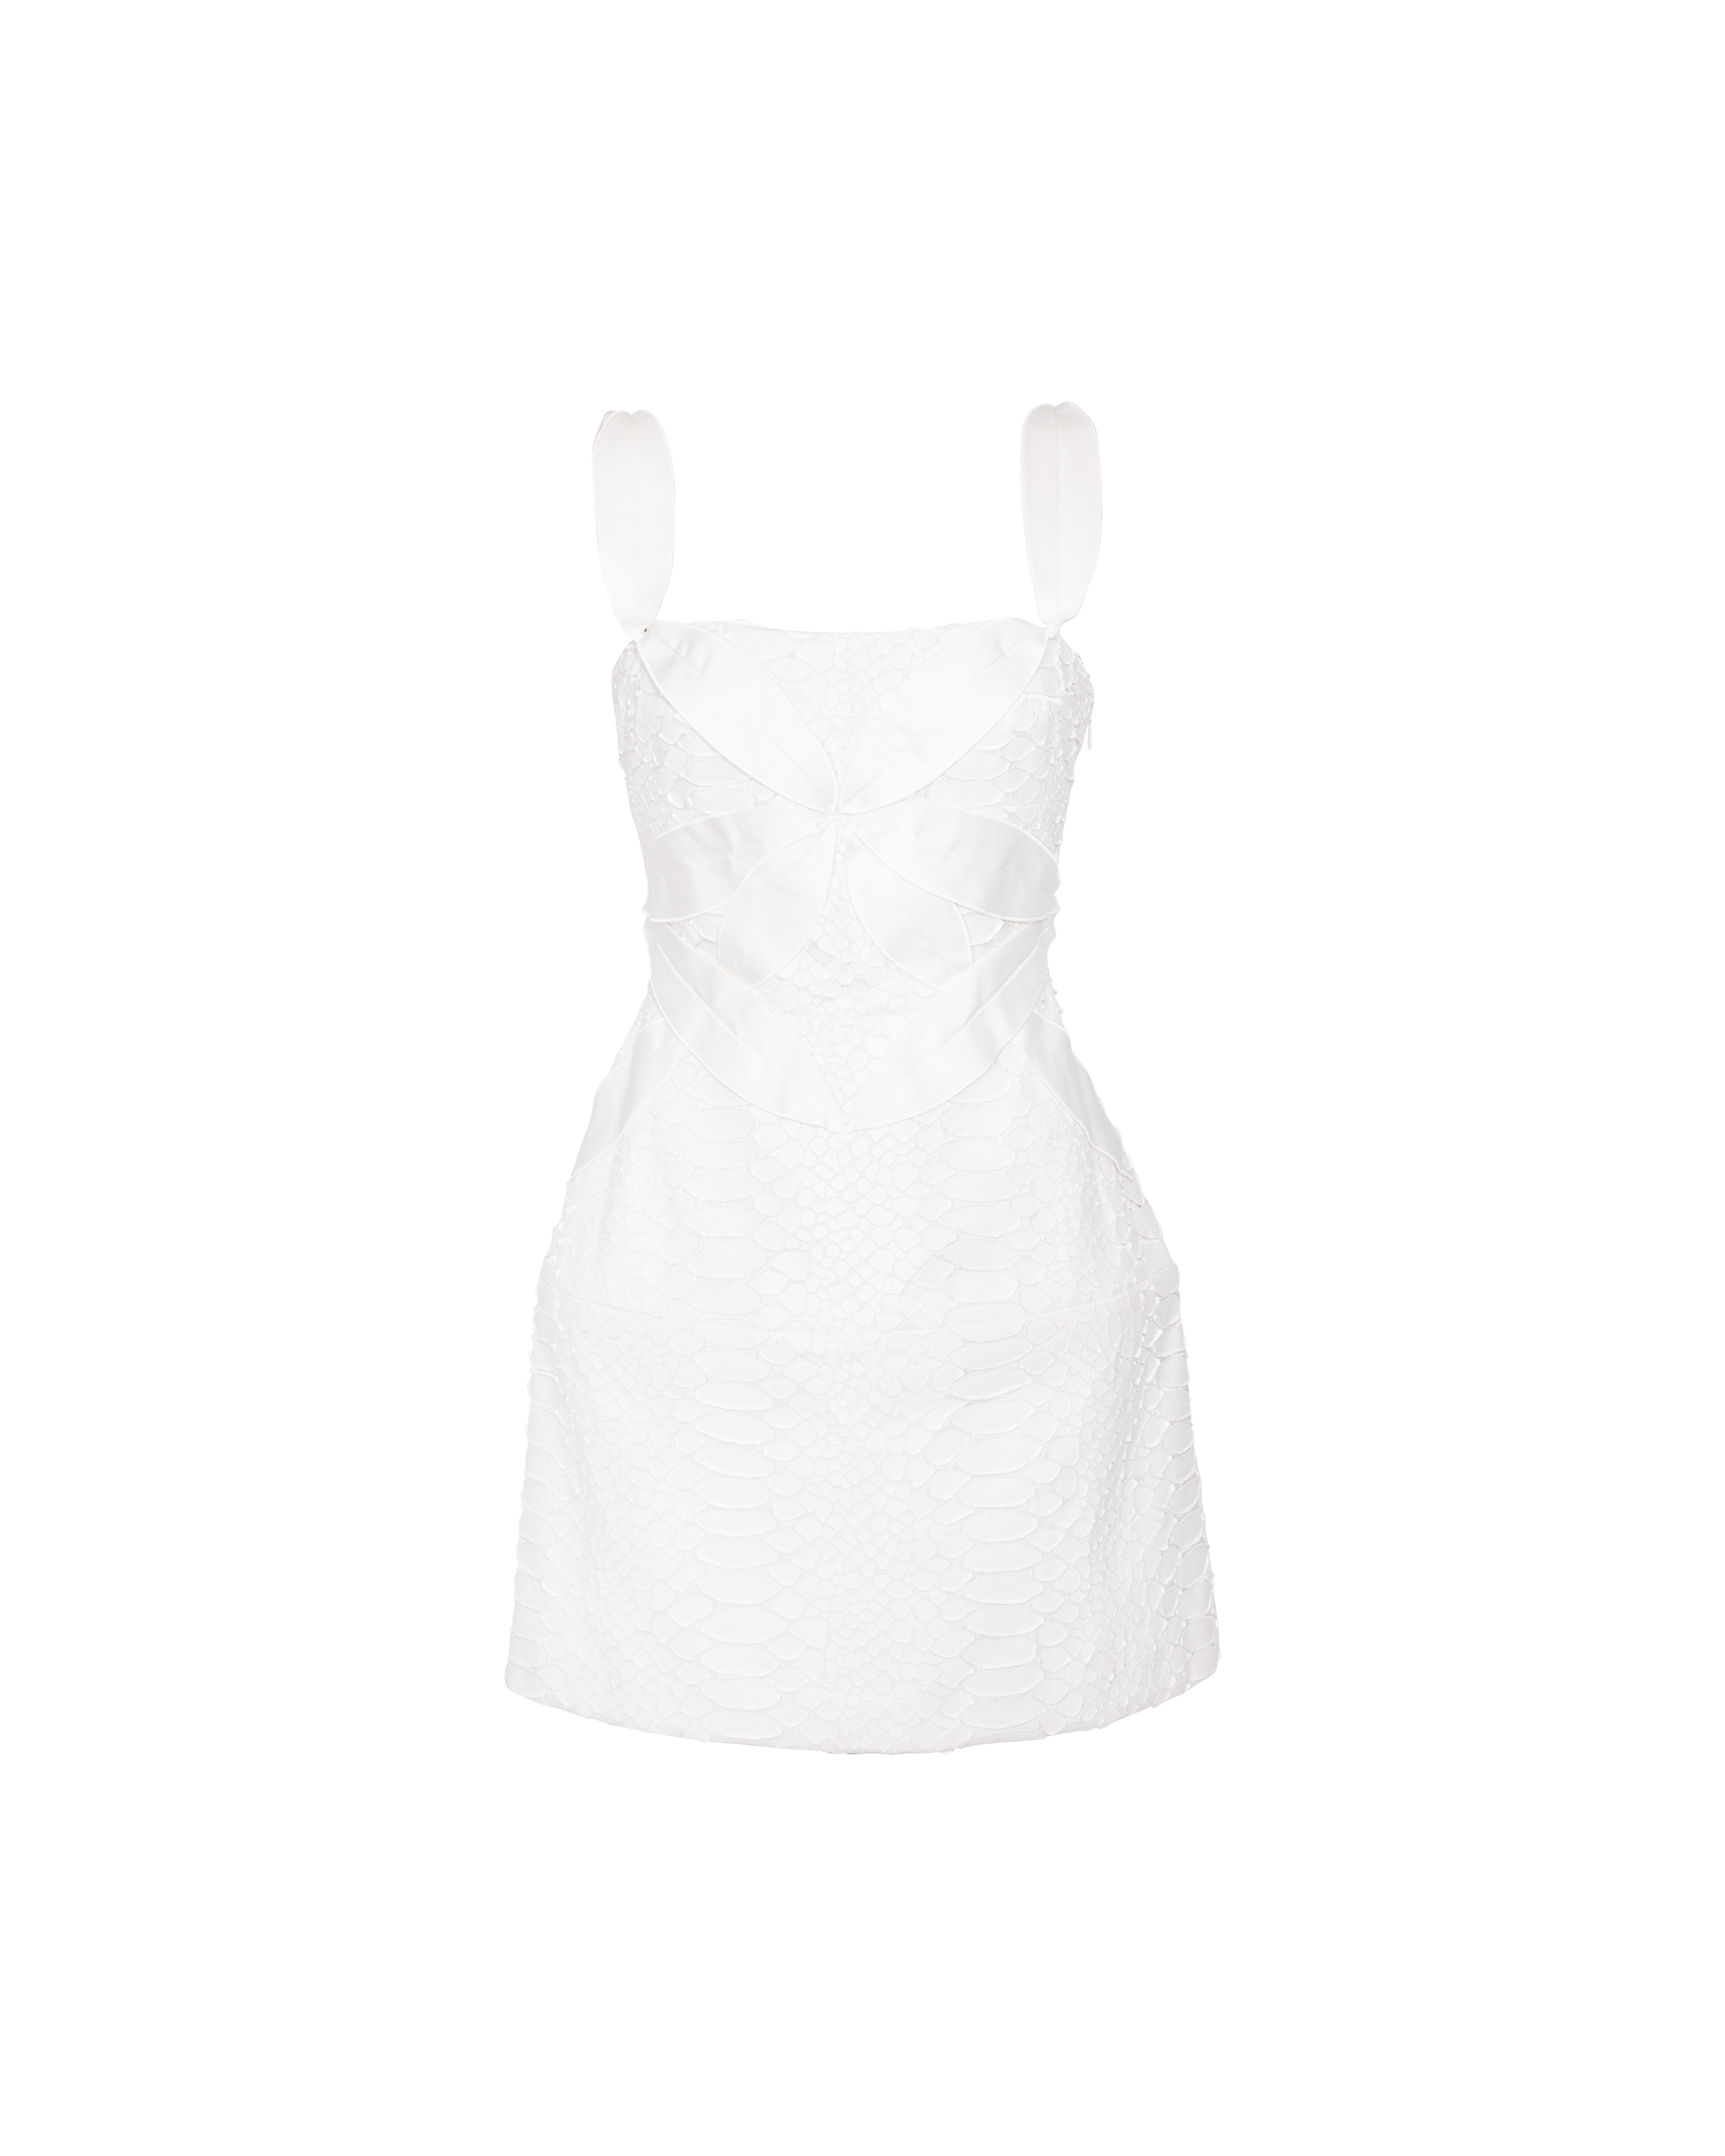 S/S 2009 White Crocodile-Effect Mini Dress